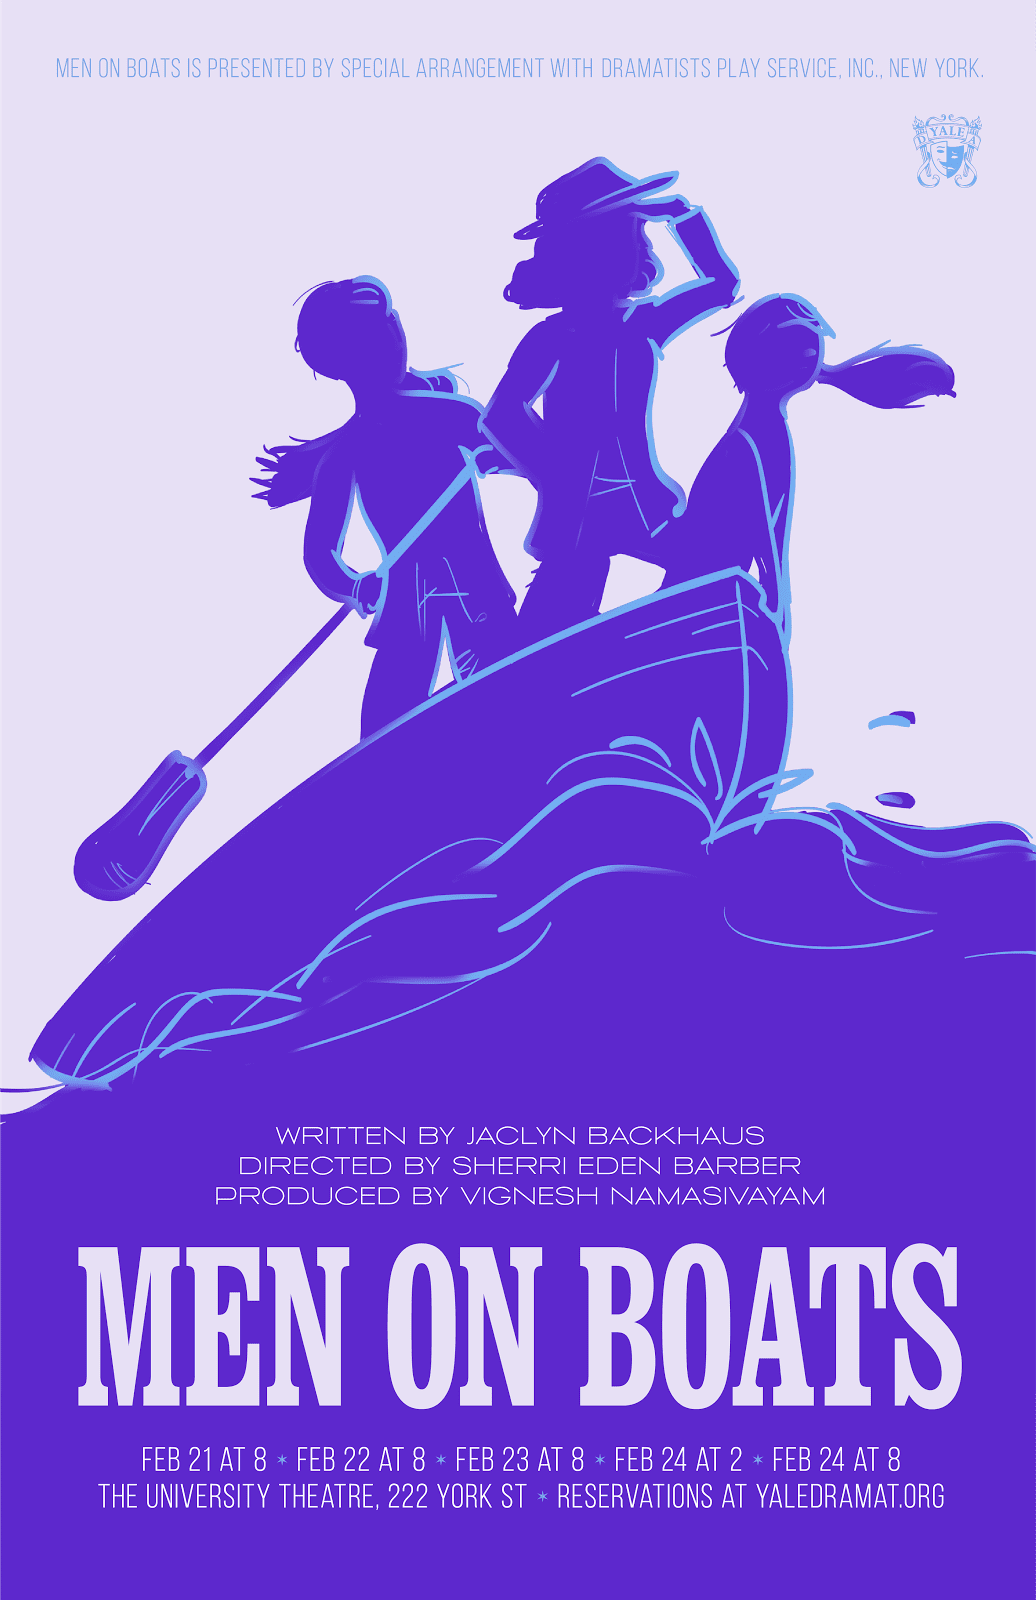 Men on Boats at Yale University Theatre